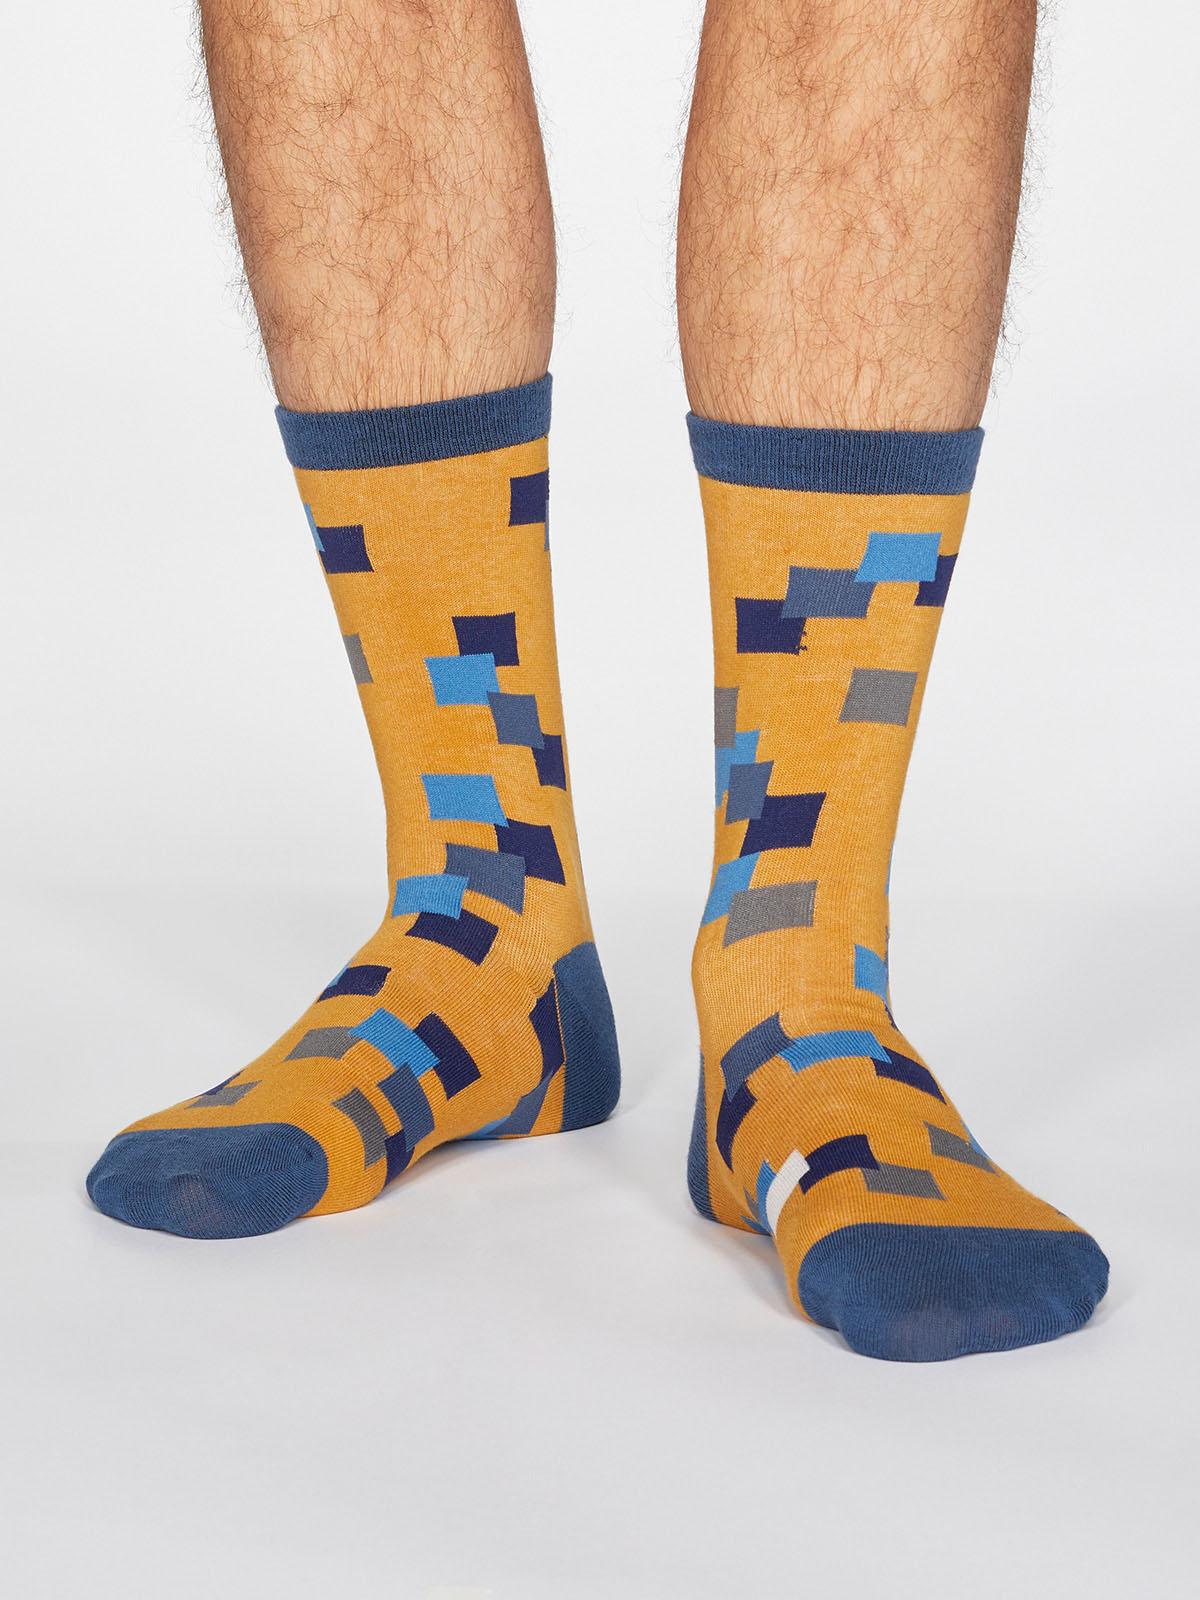 Evan Square Socks - Mustard Yellow - Thought Clothing UK